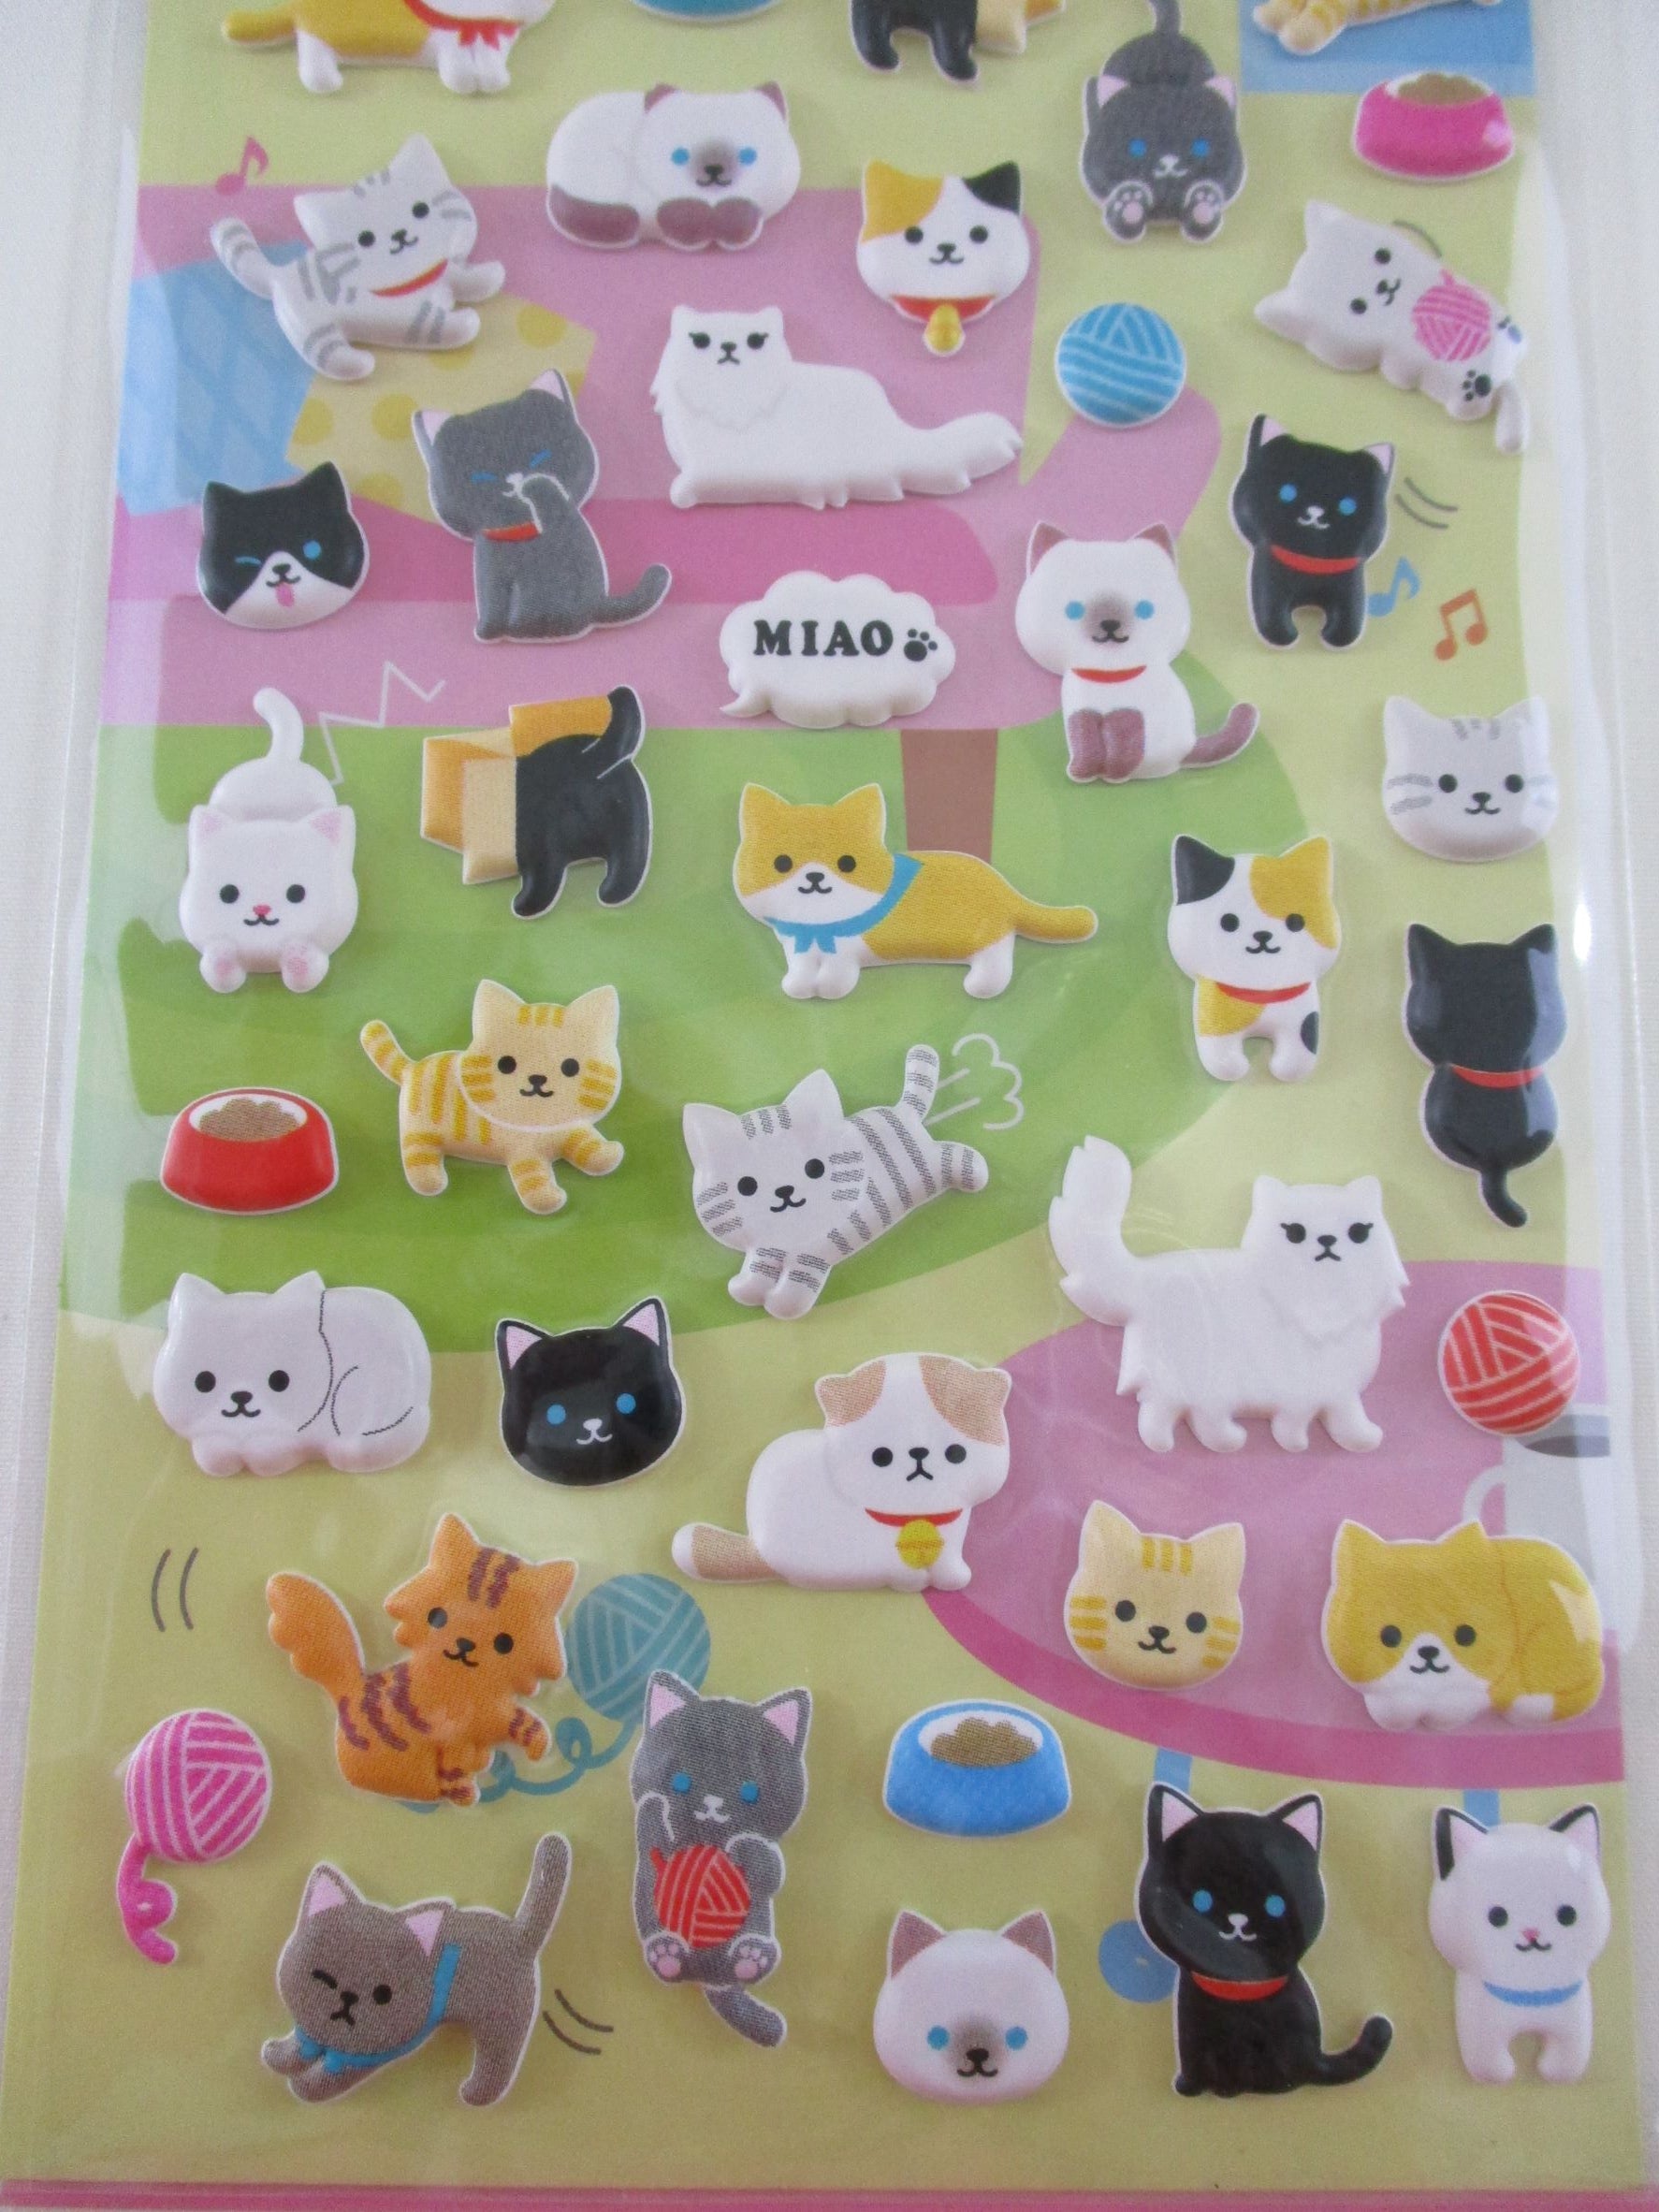 Kawaii Cute Cat - Cat - Sticker